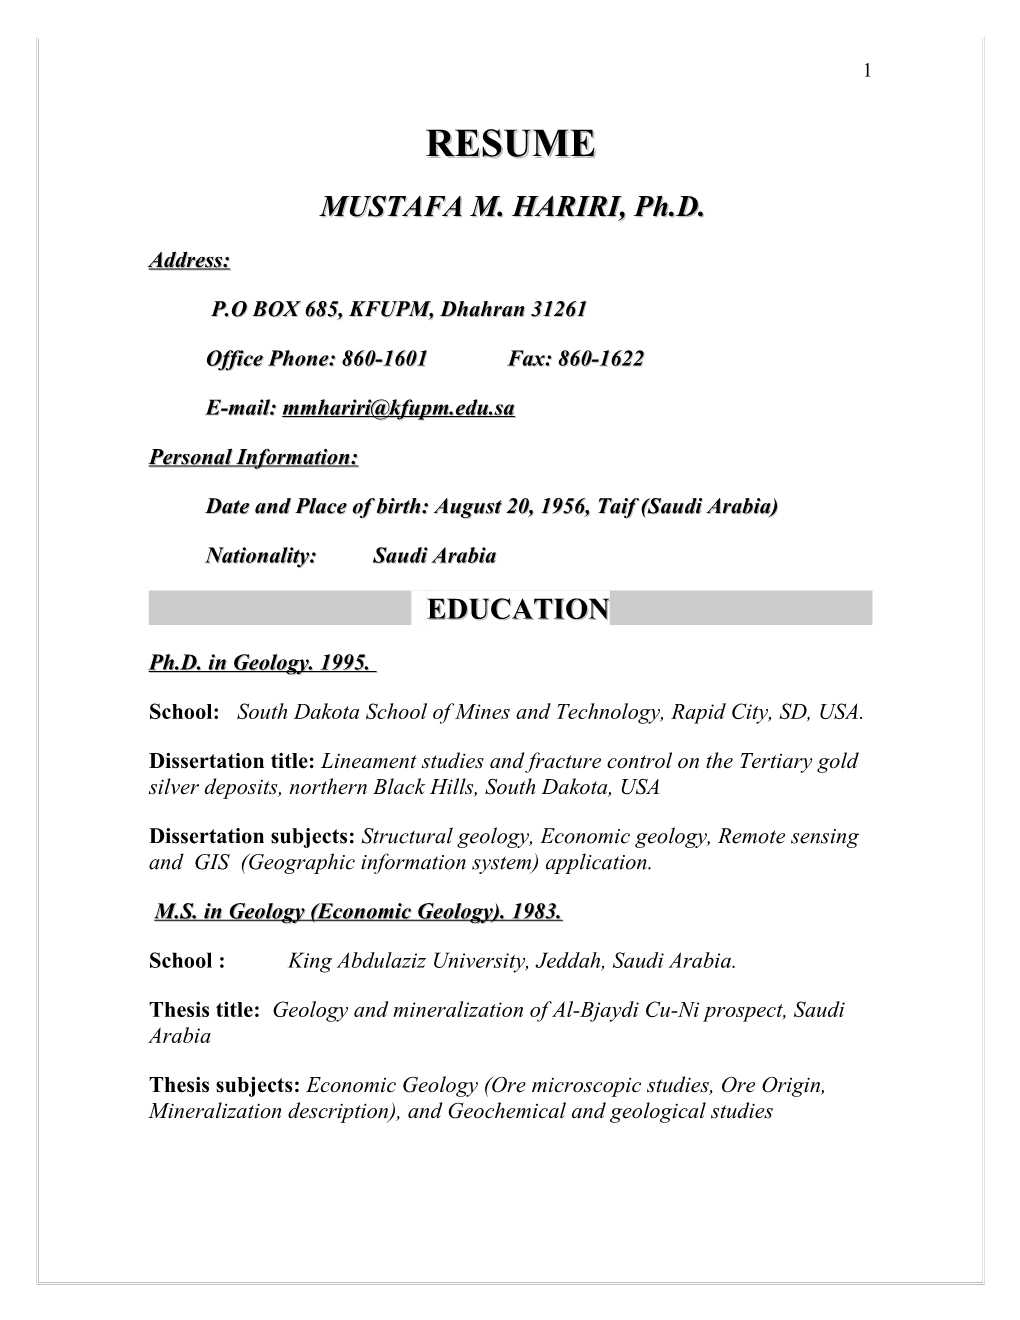 MUSTAFA M. HARIRI, Ph.D